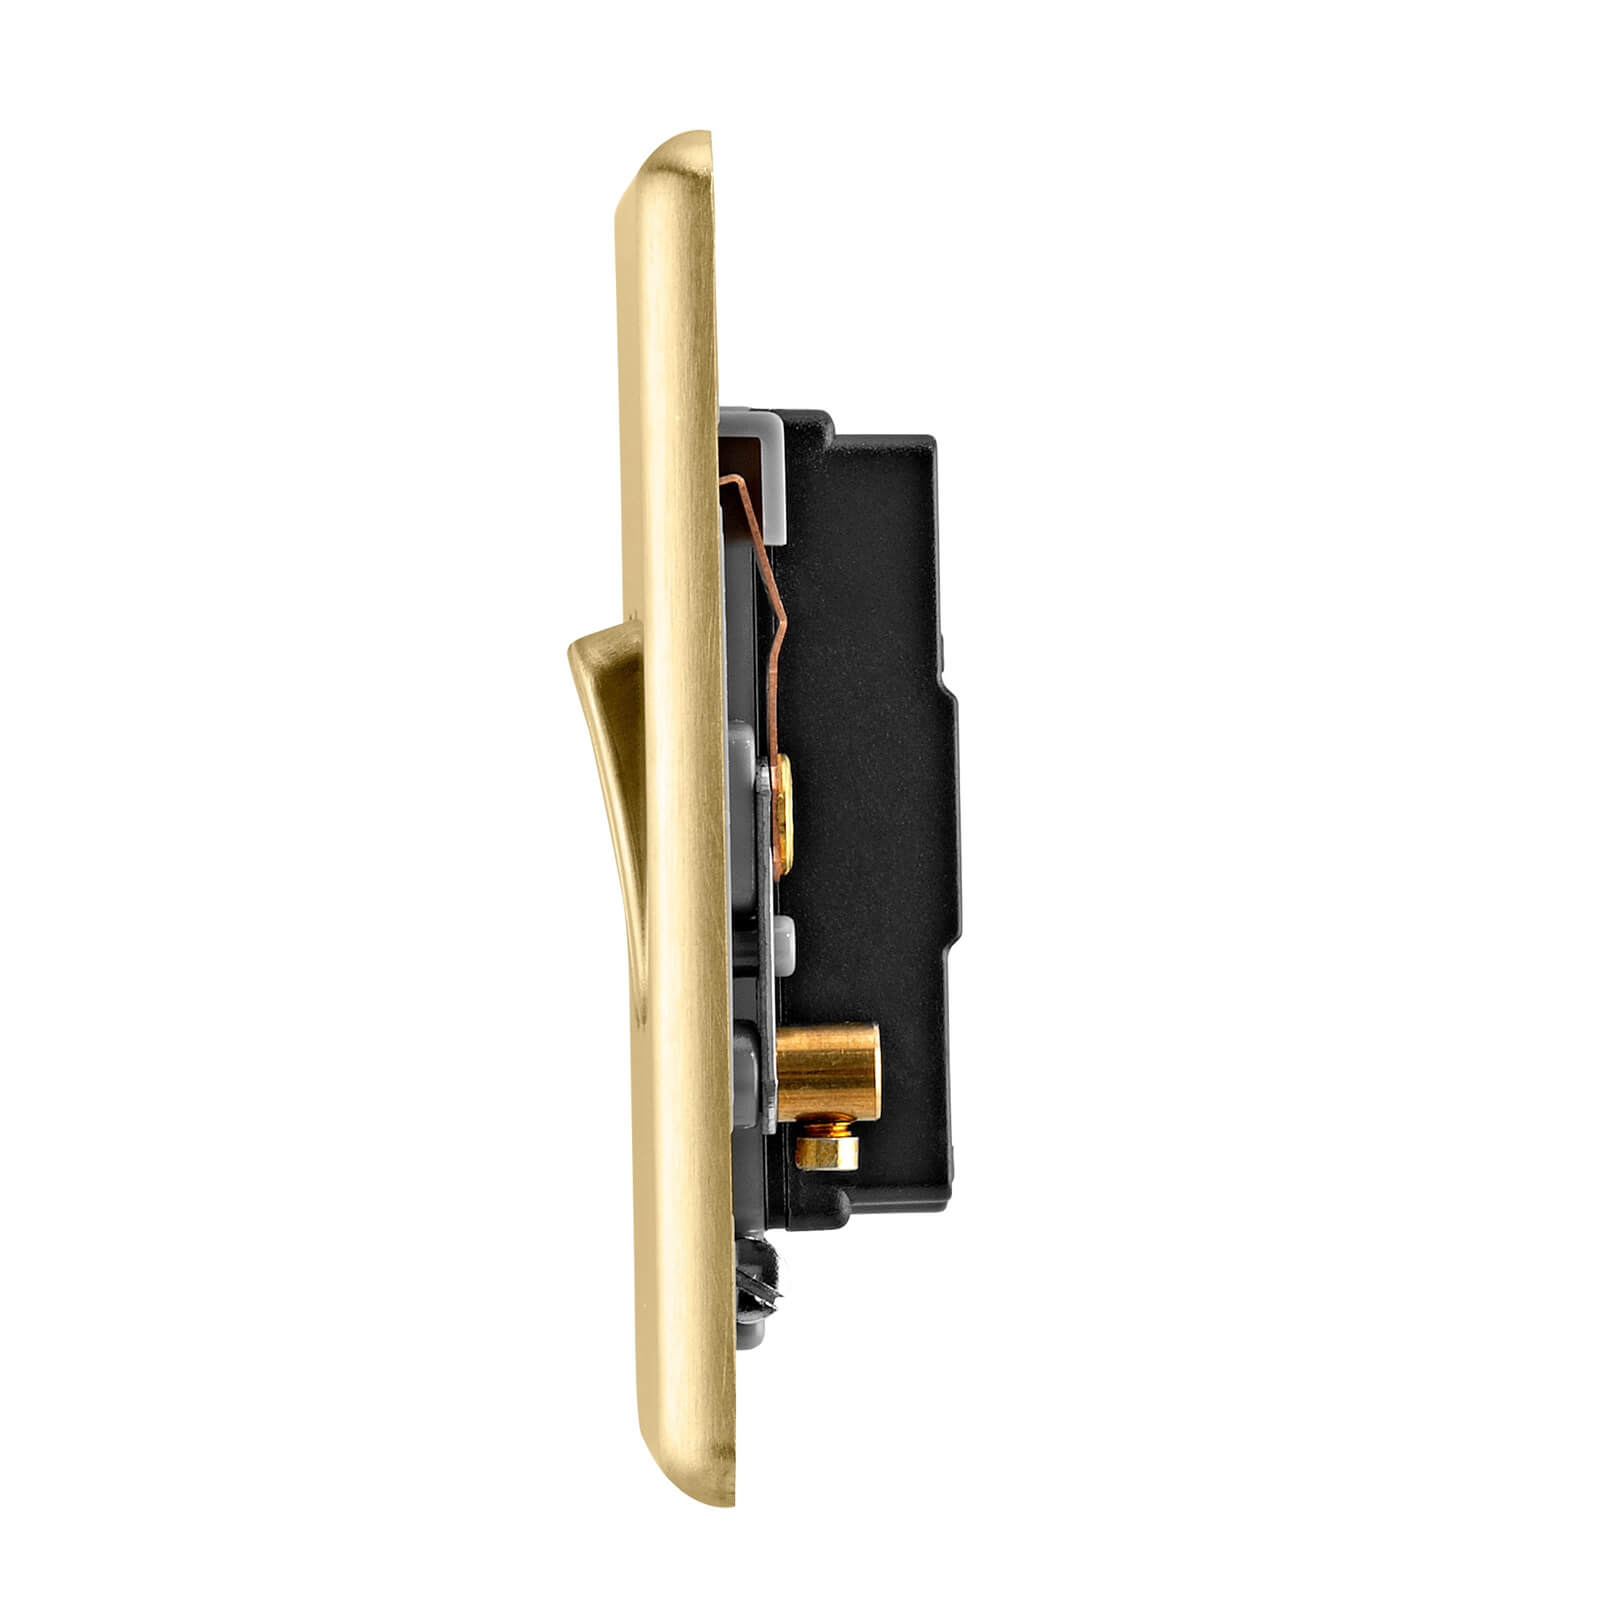 Arlec Fusion 10A 1Gang 2Way Gold Single light switch